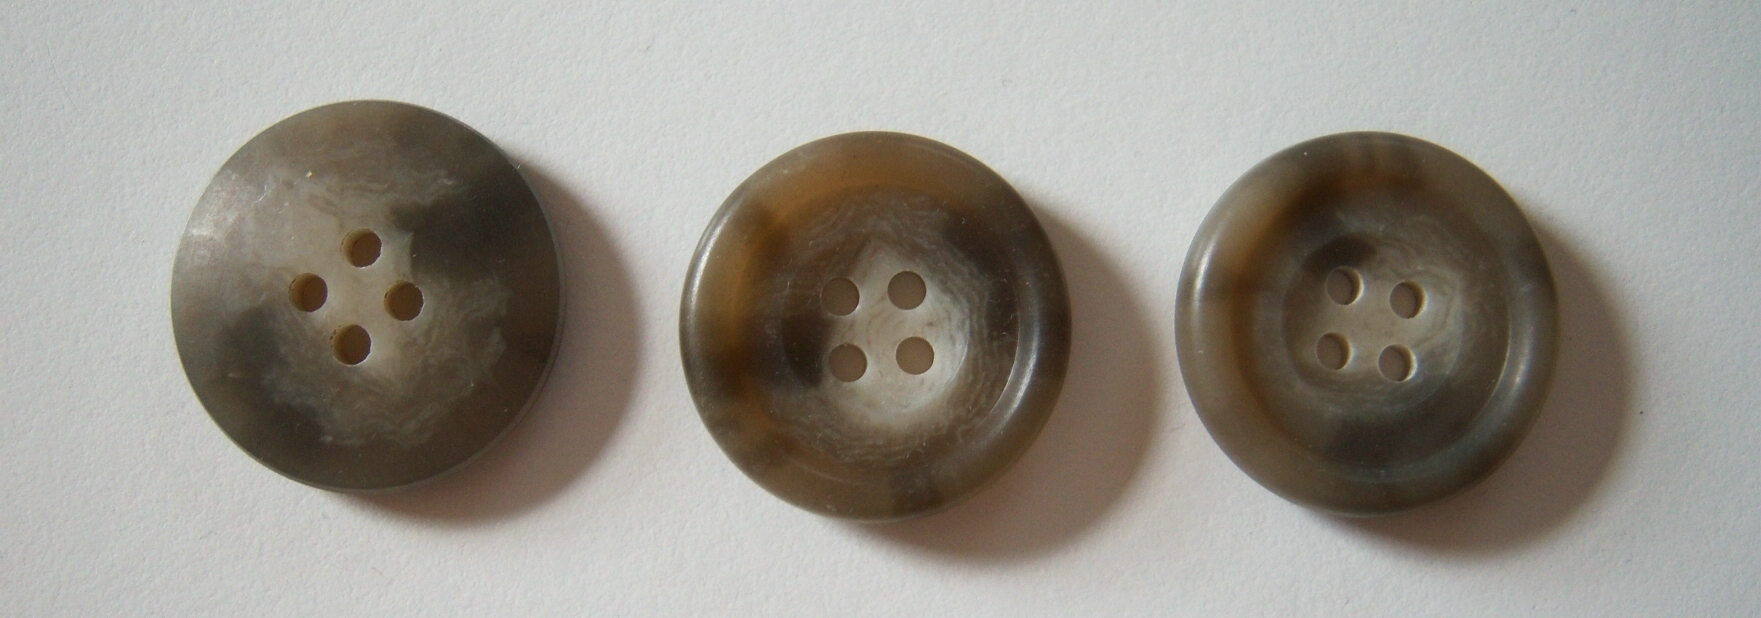 Khaki/Taupe Marbled 7/8" 4 Hole Button